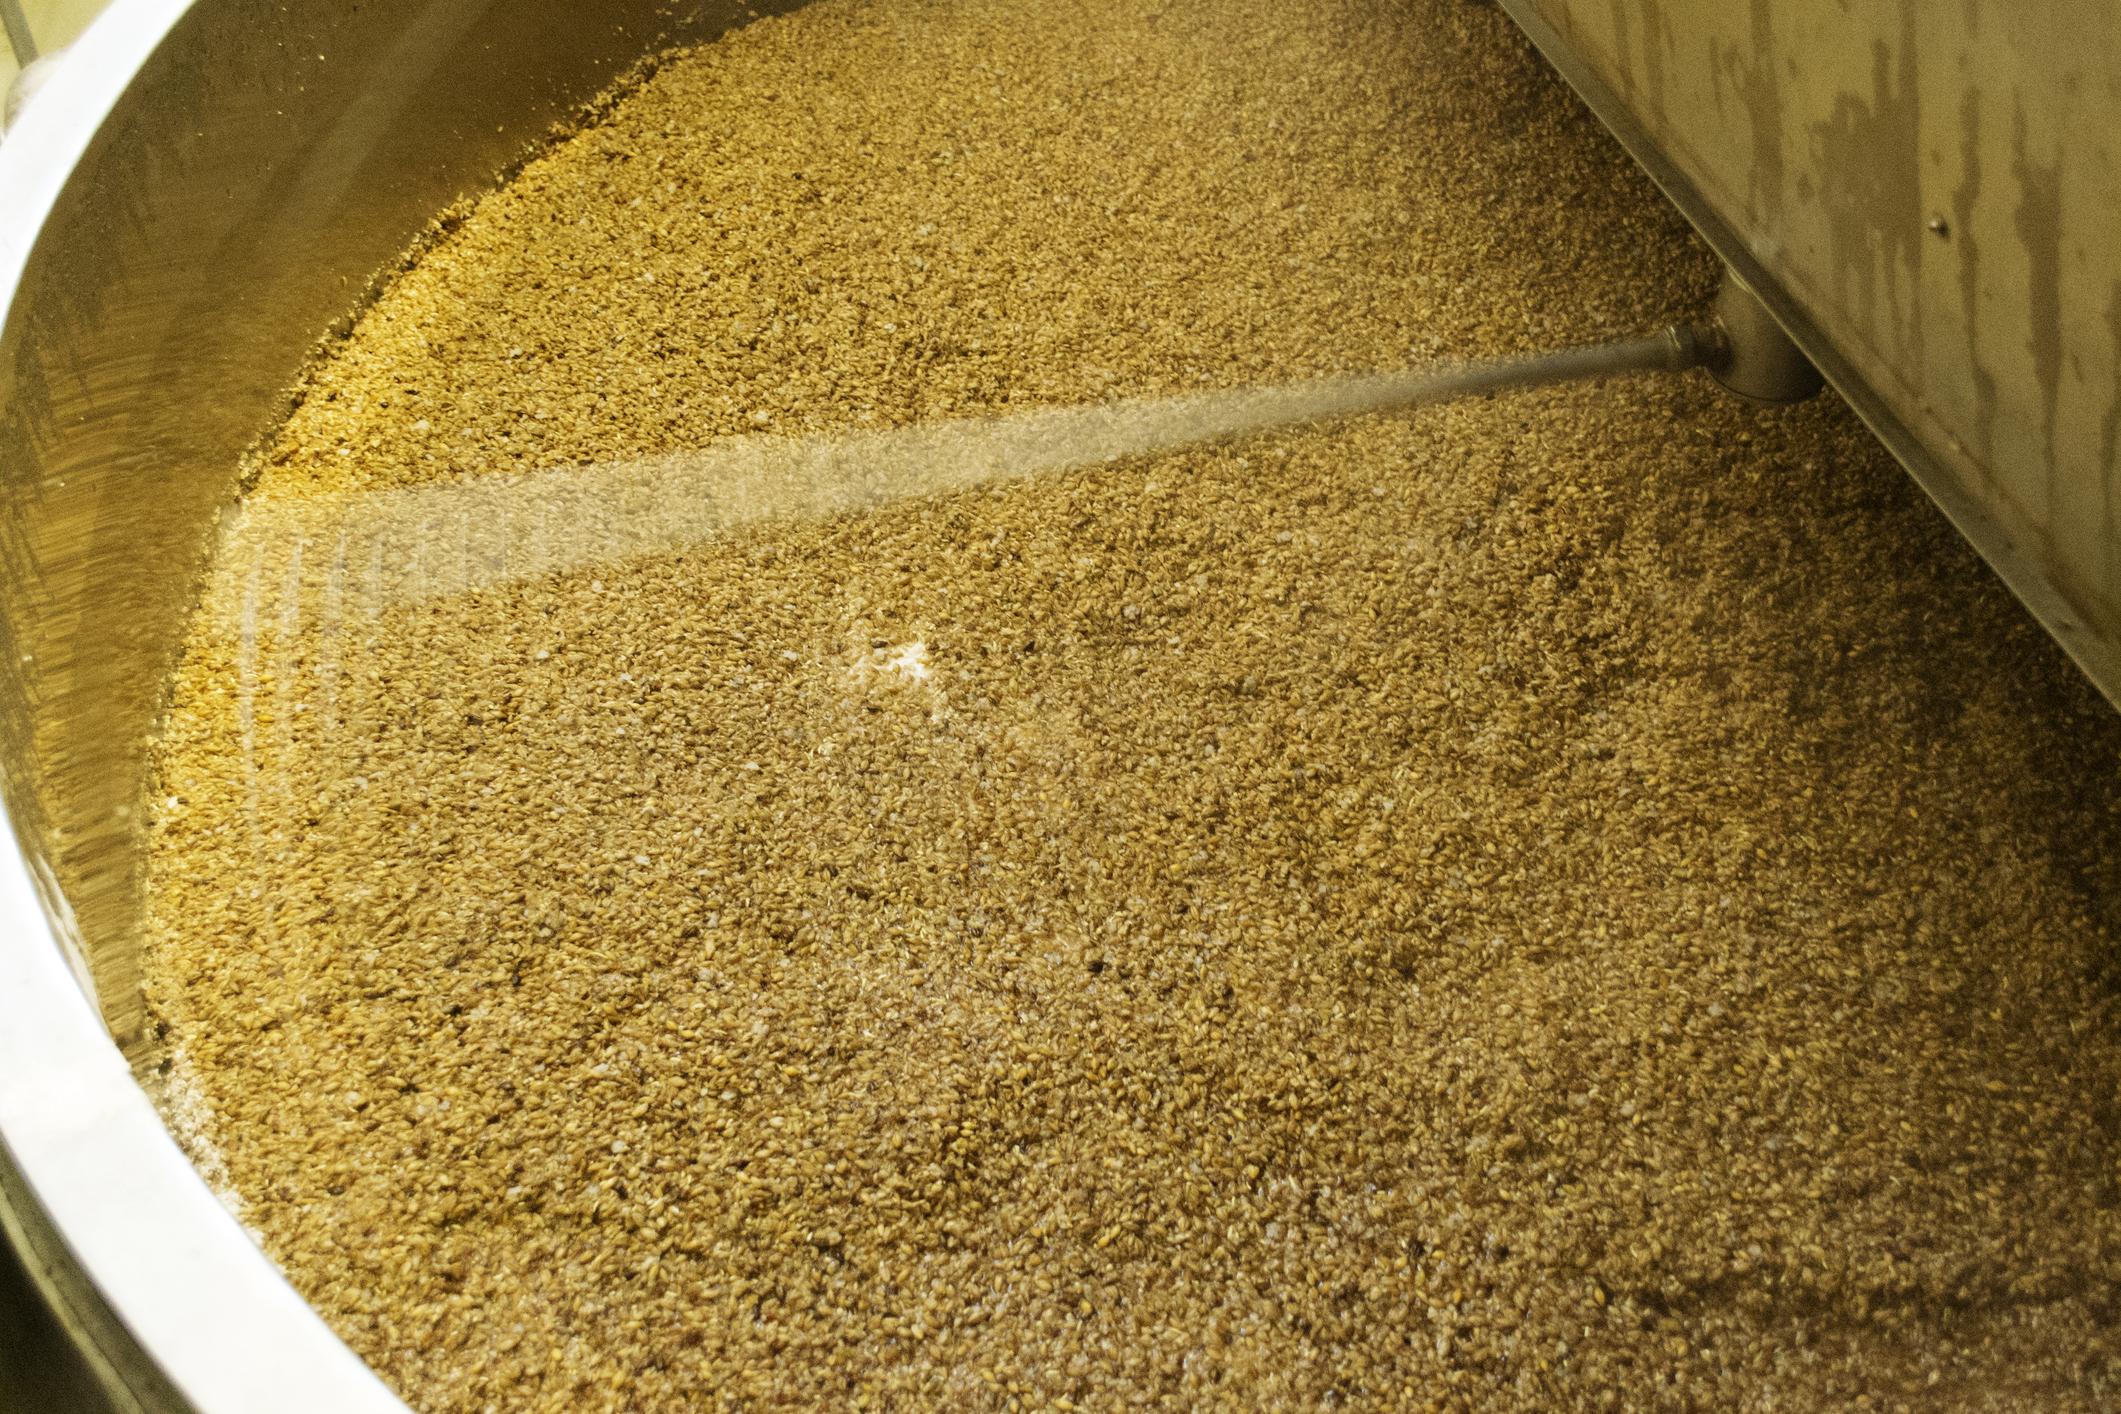 One-Pot Bioconversion of Distiller's Grains to Advanced Biofuels